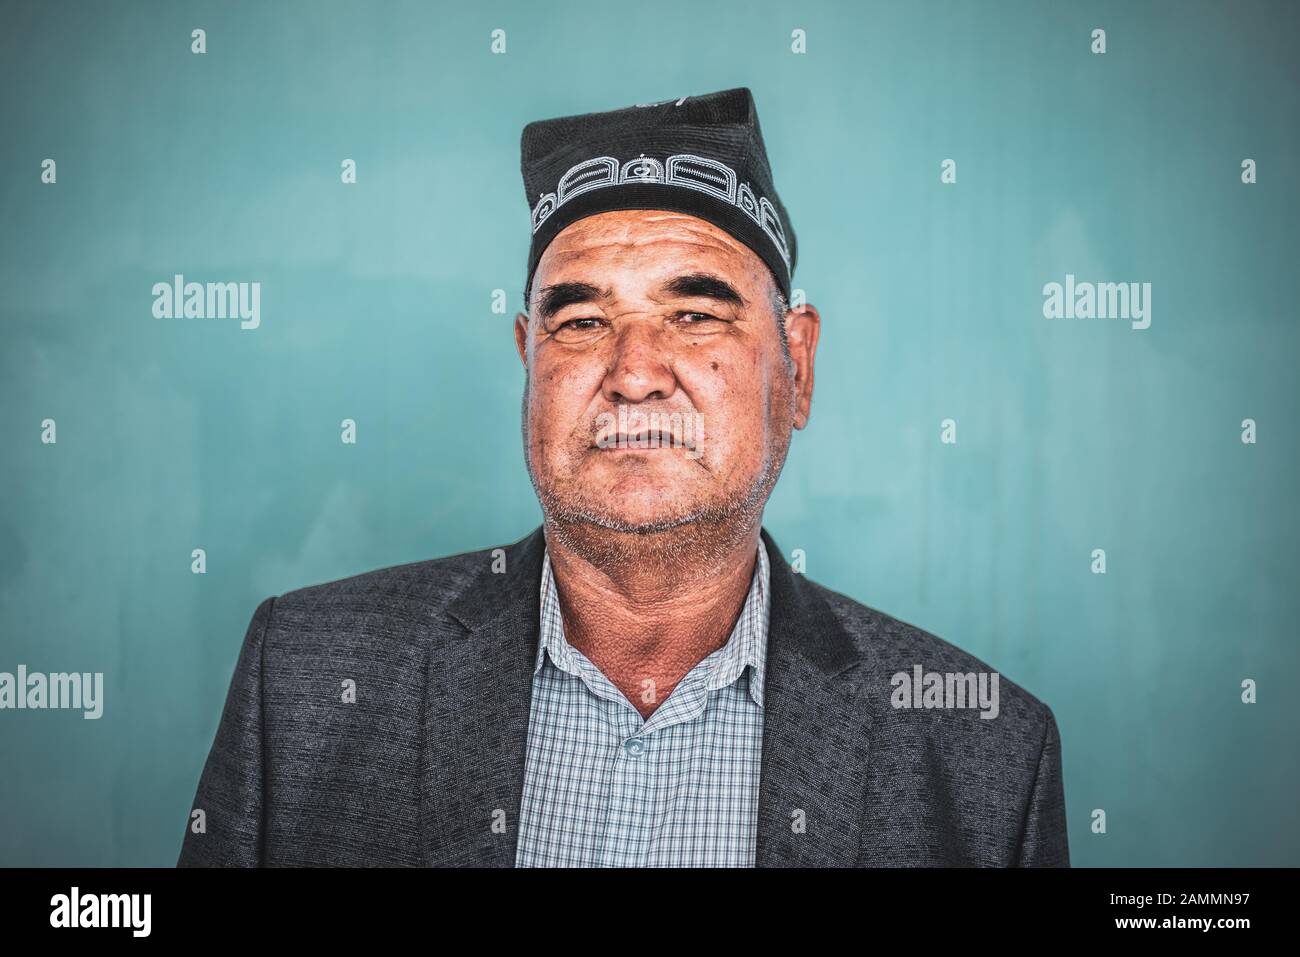 UZBEKISTAN, 2019: portrait of Uzbek people Stock Photo